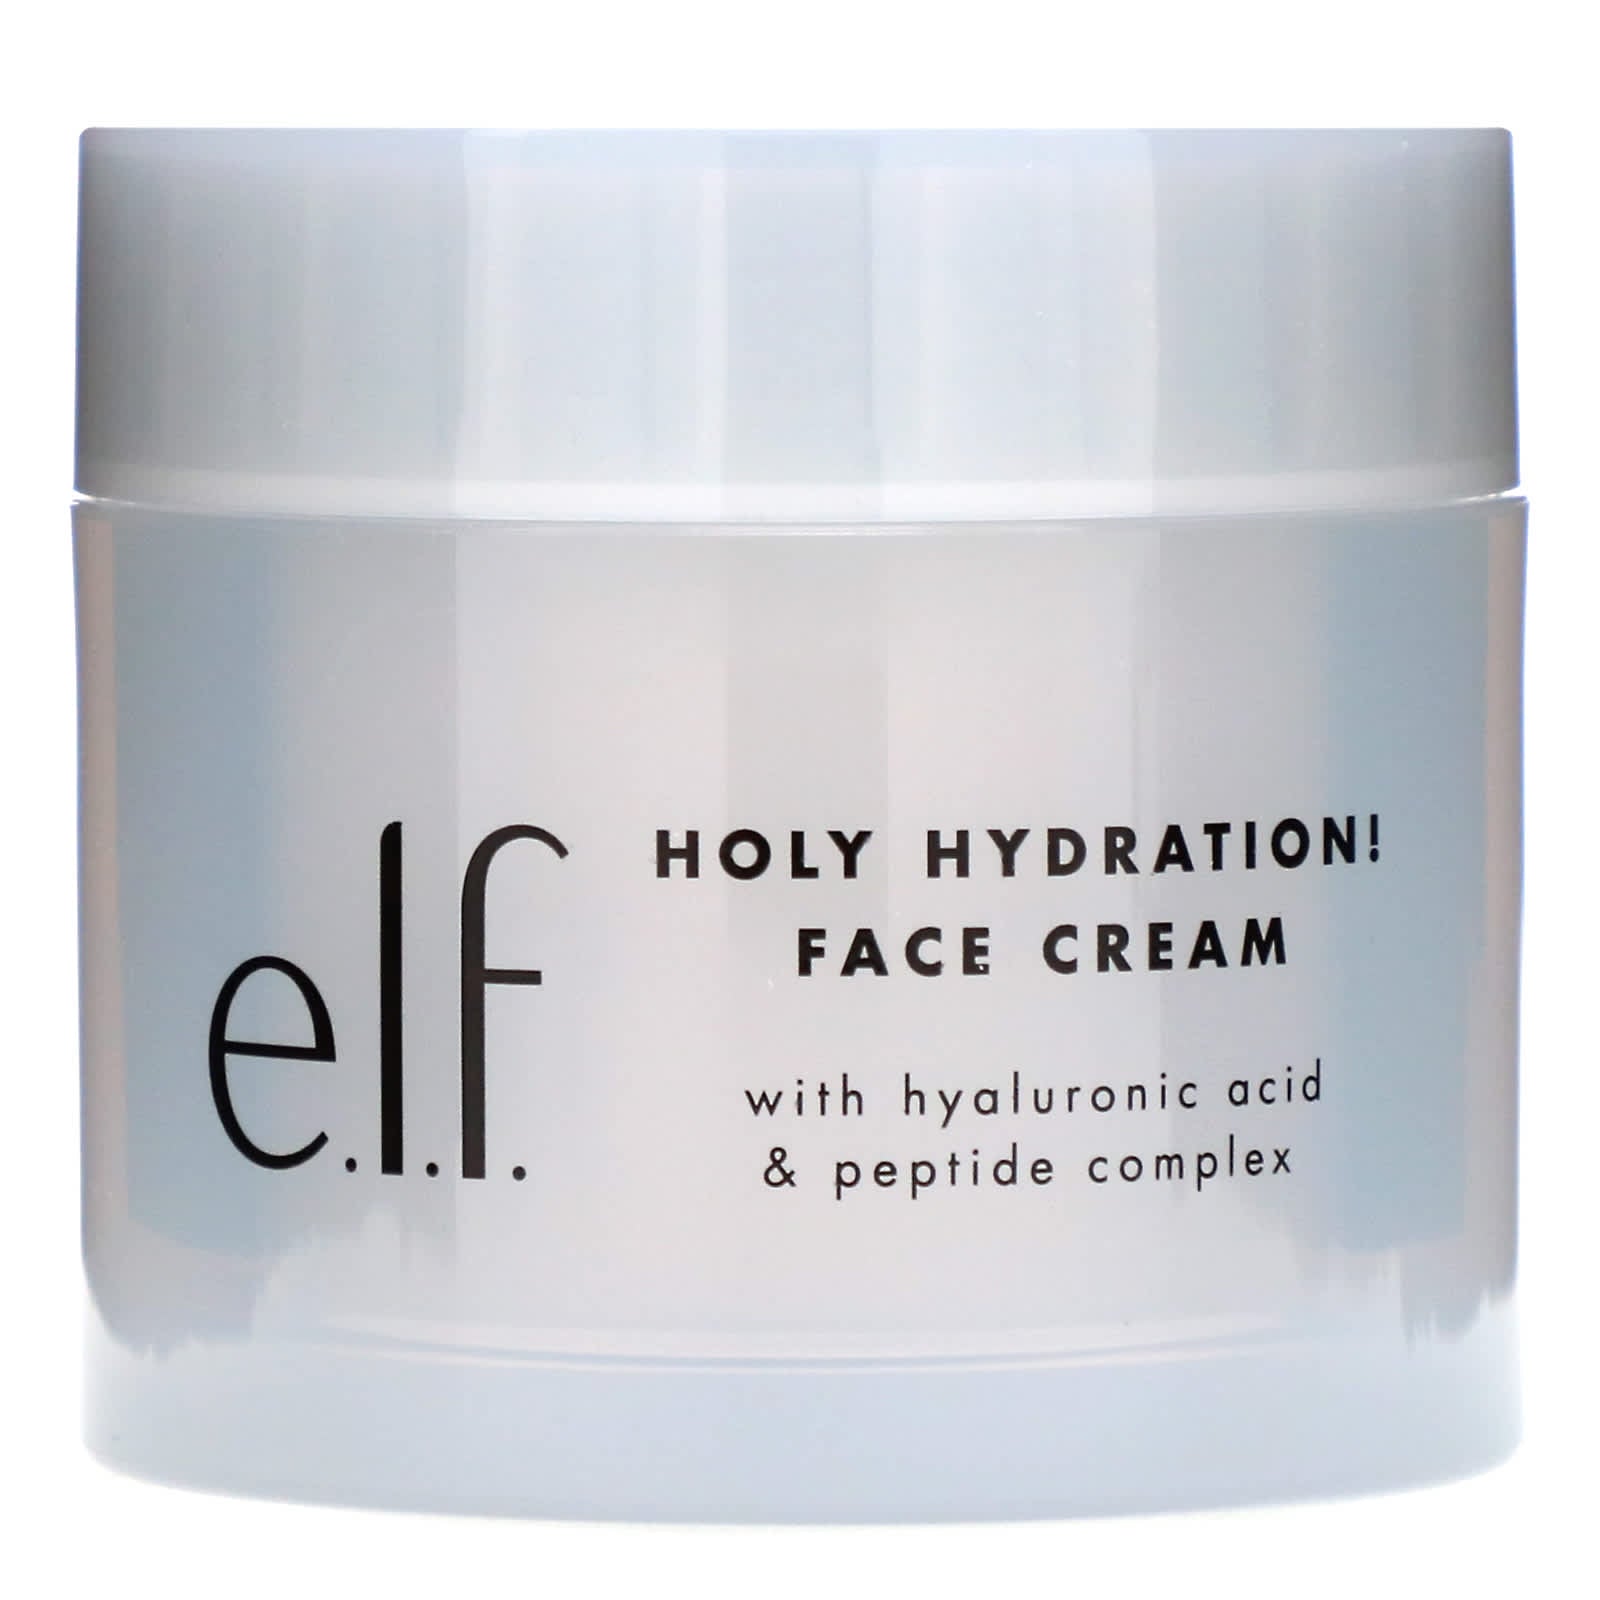 E.L.F., Holy Hydration! Face Cream (50 g)